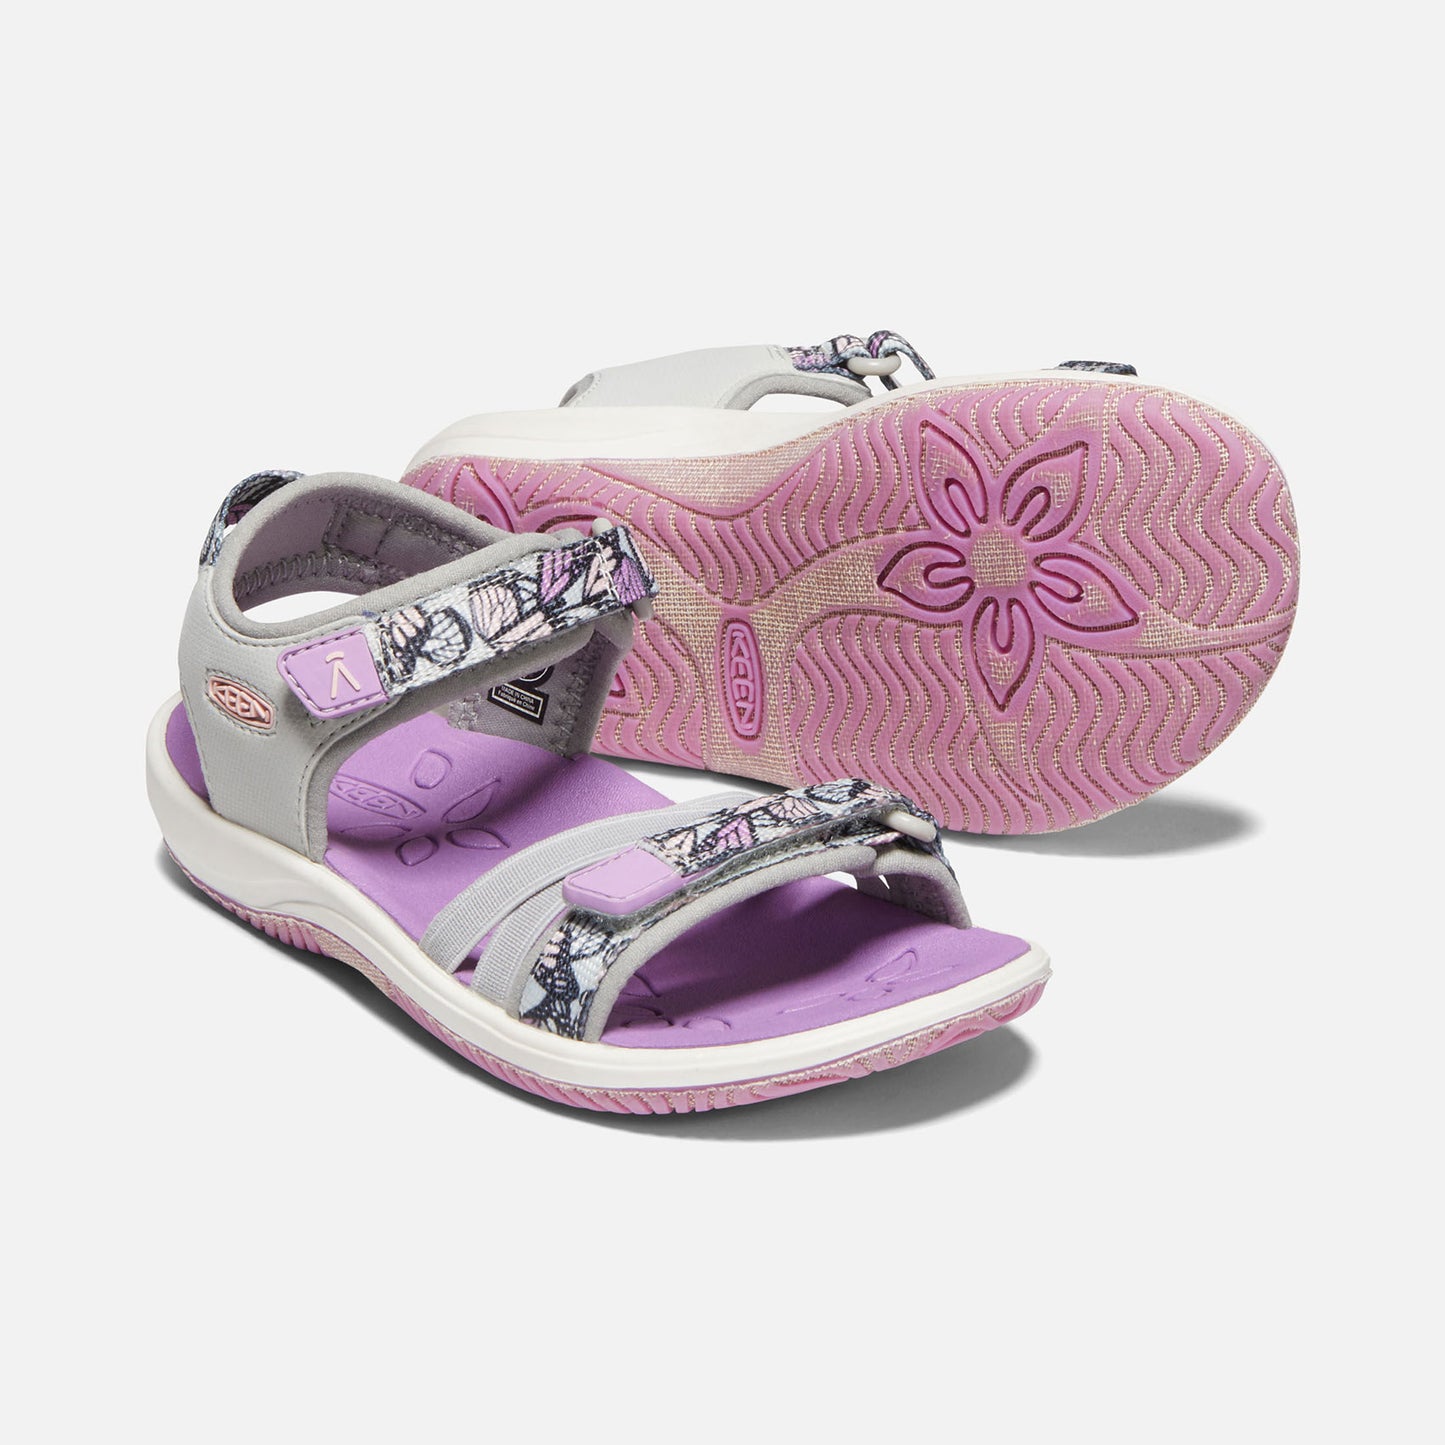 Little Kids' Verano Sandal - Vapor/African Violet